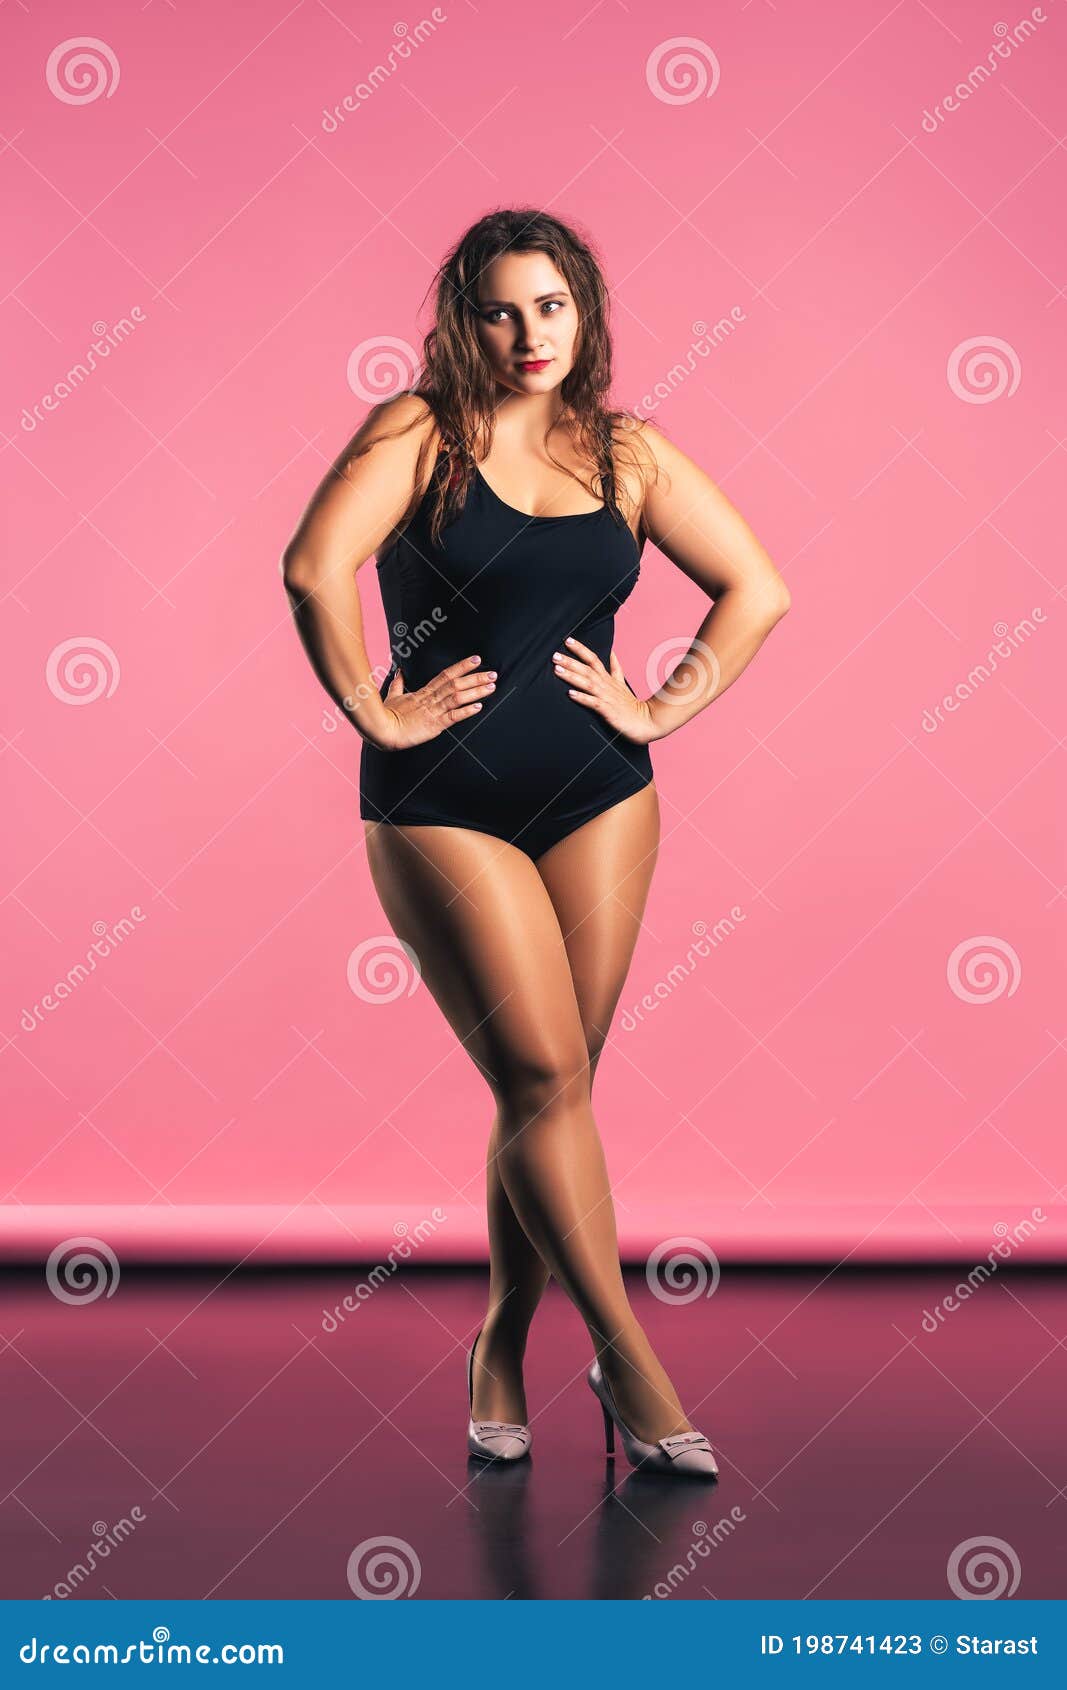 Plus Size Fashion Model in Black One-piece Swimsuit, Fat Woman in